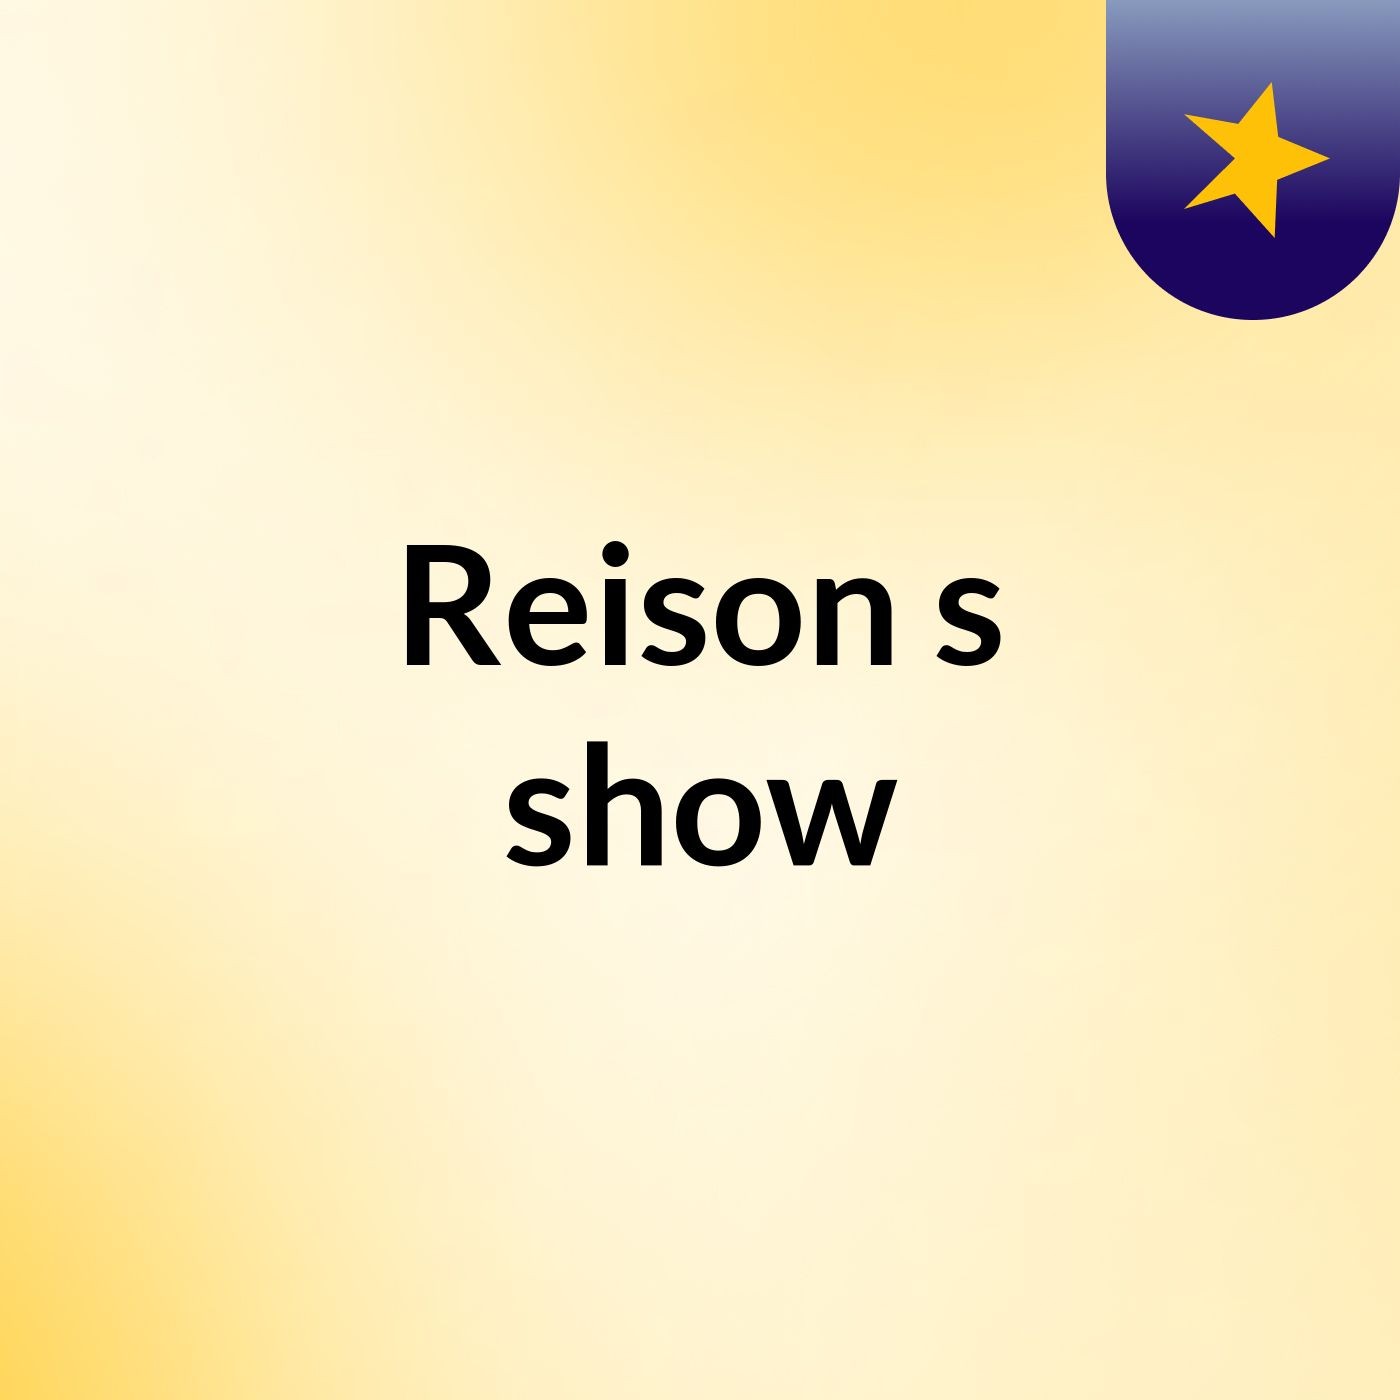 Reison's show